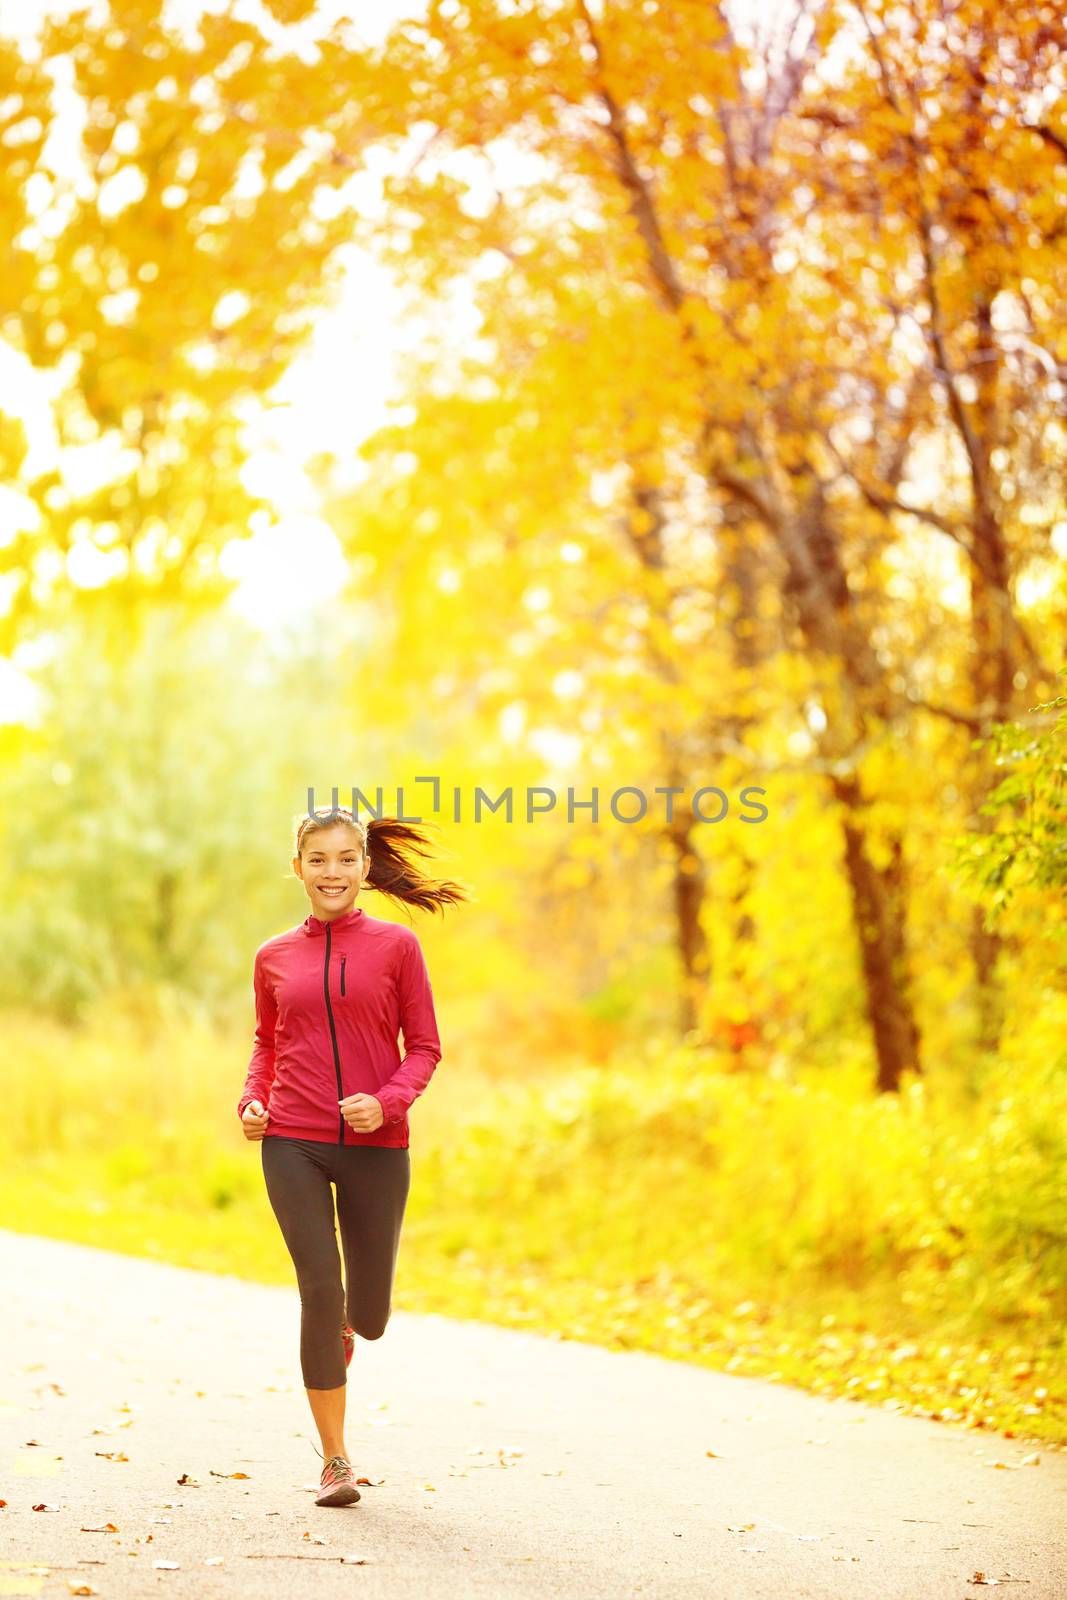 Athlete runner woman running in fall autumn forest by Maridav